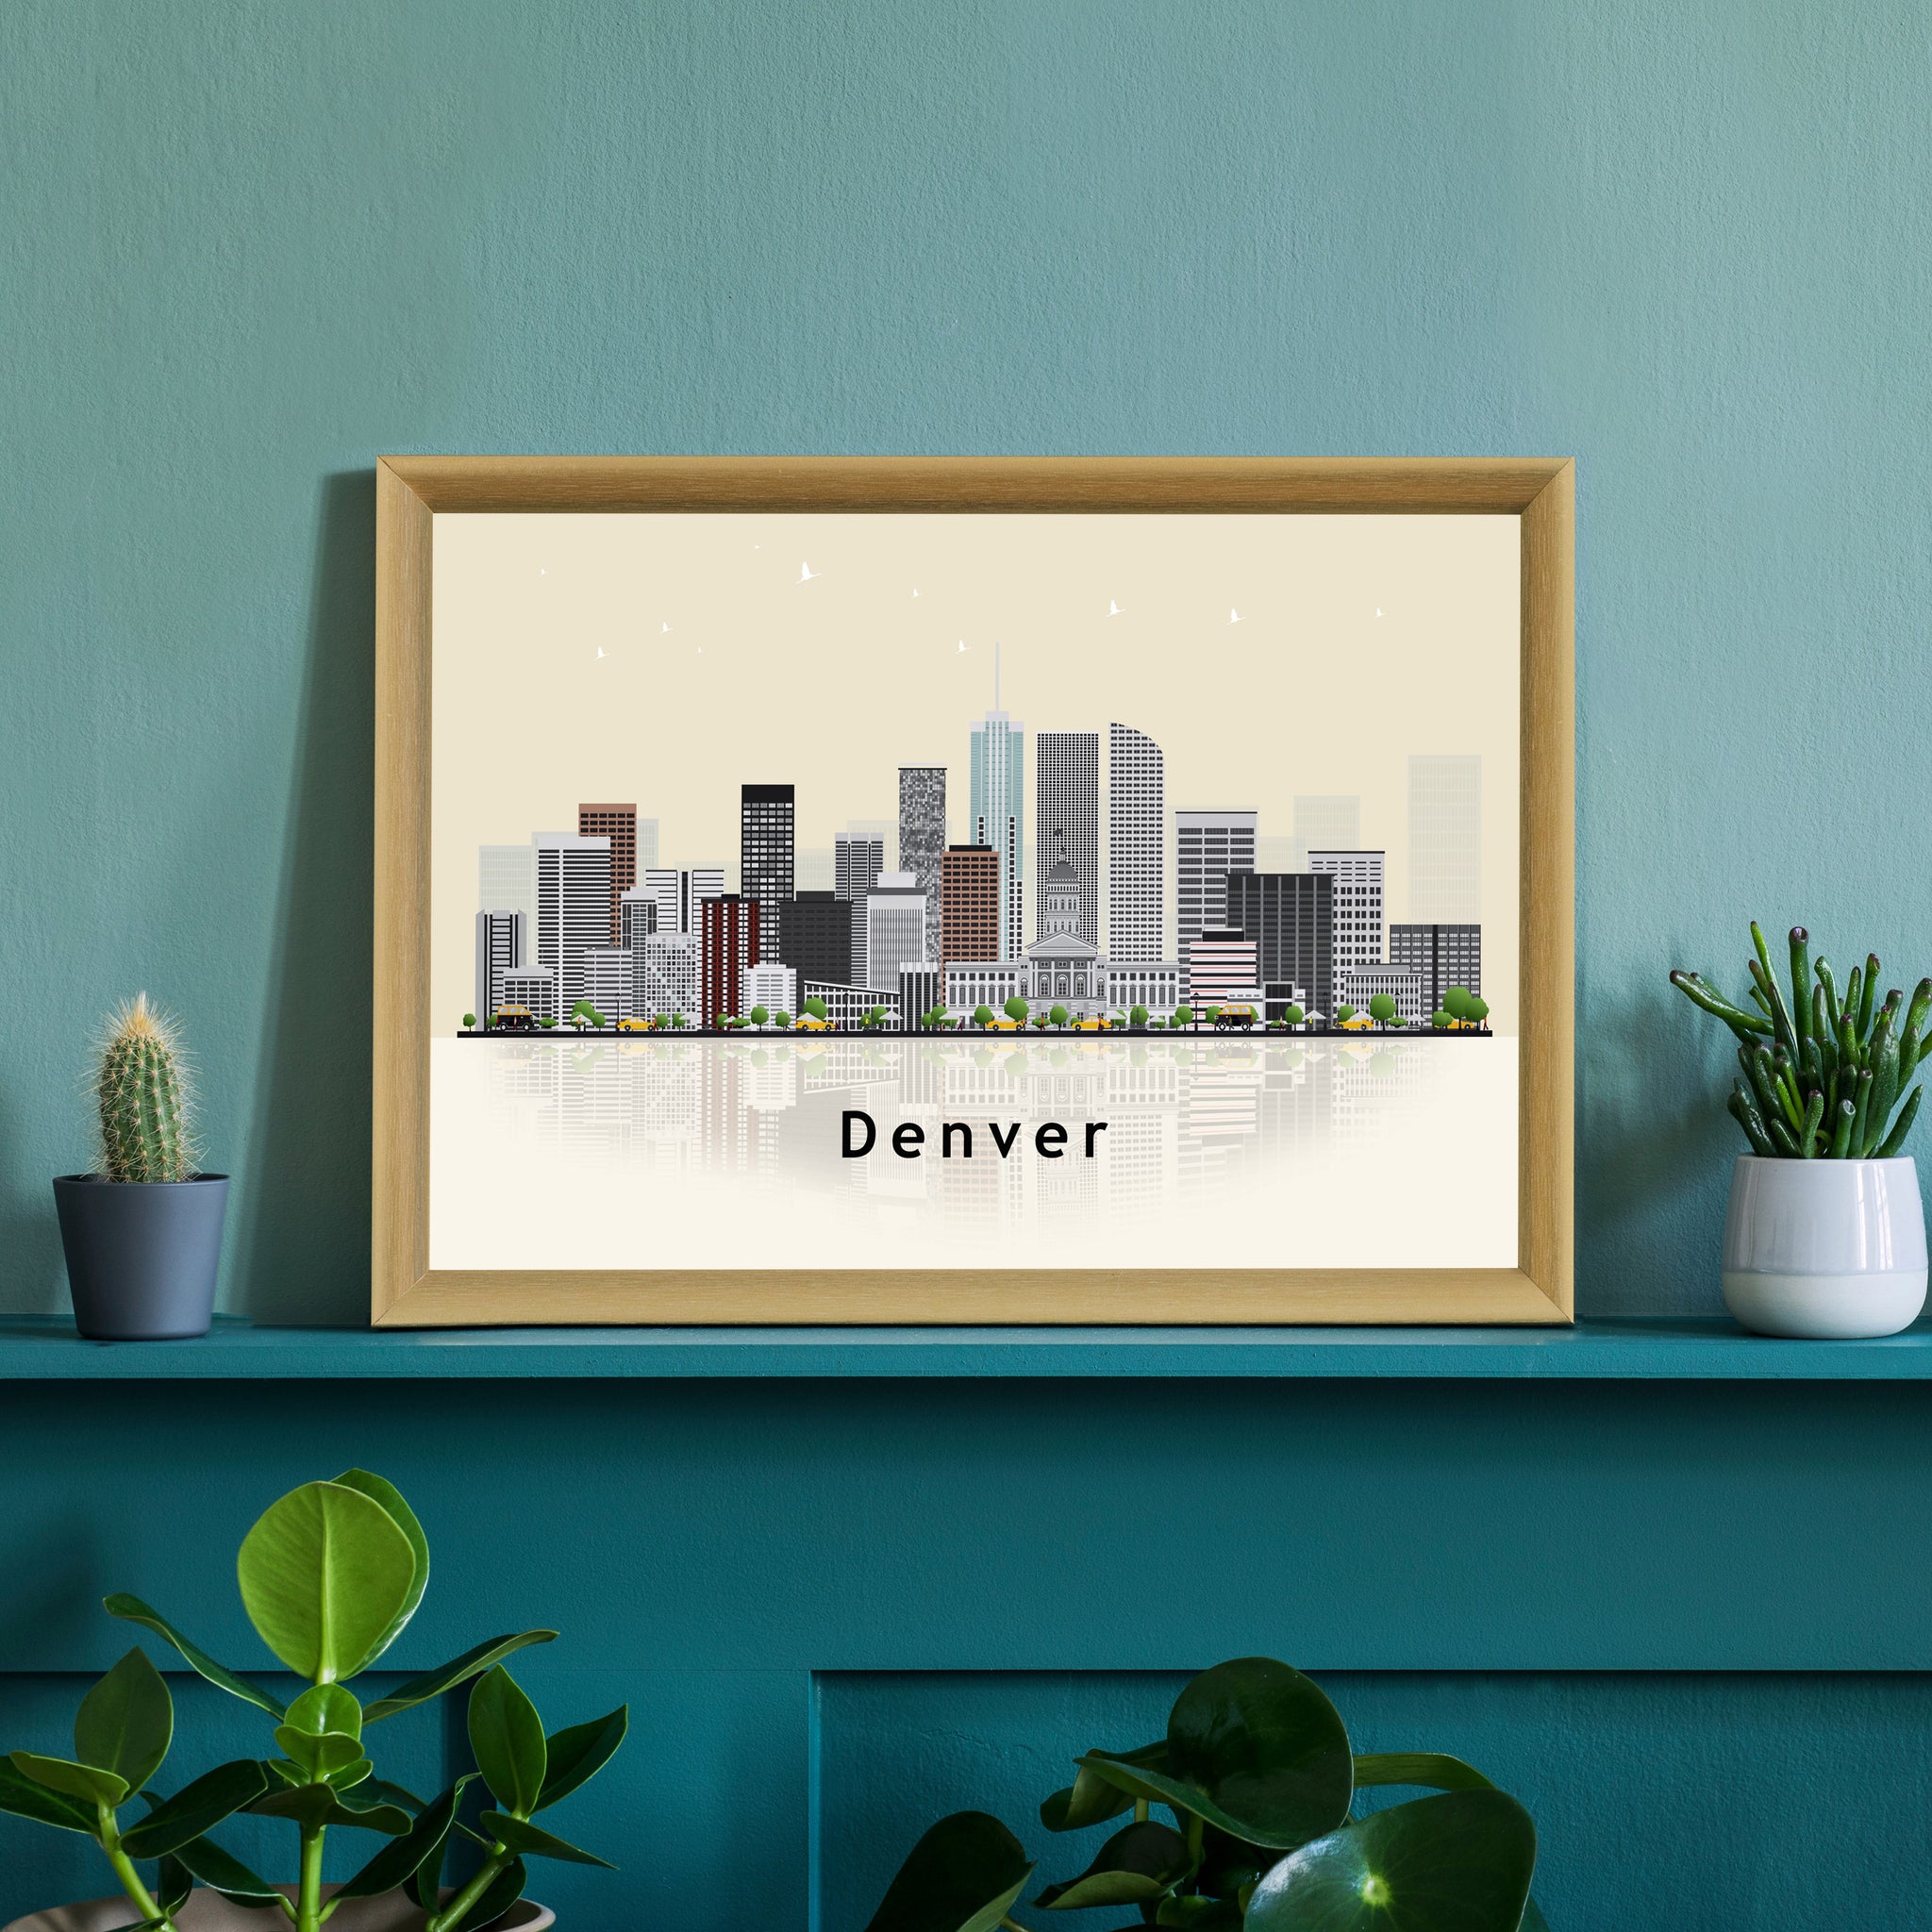 DENVER COLORADO Illustration skyline poster, Colorado state modern skyline cityscape poster, Landmark art print, Home decoration